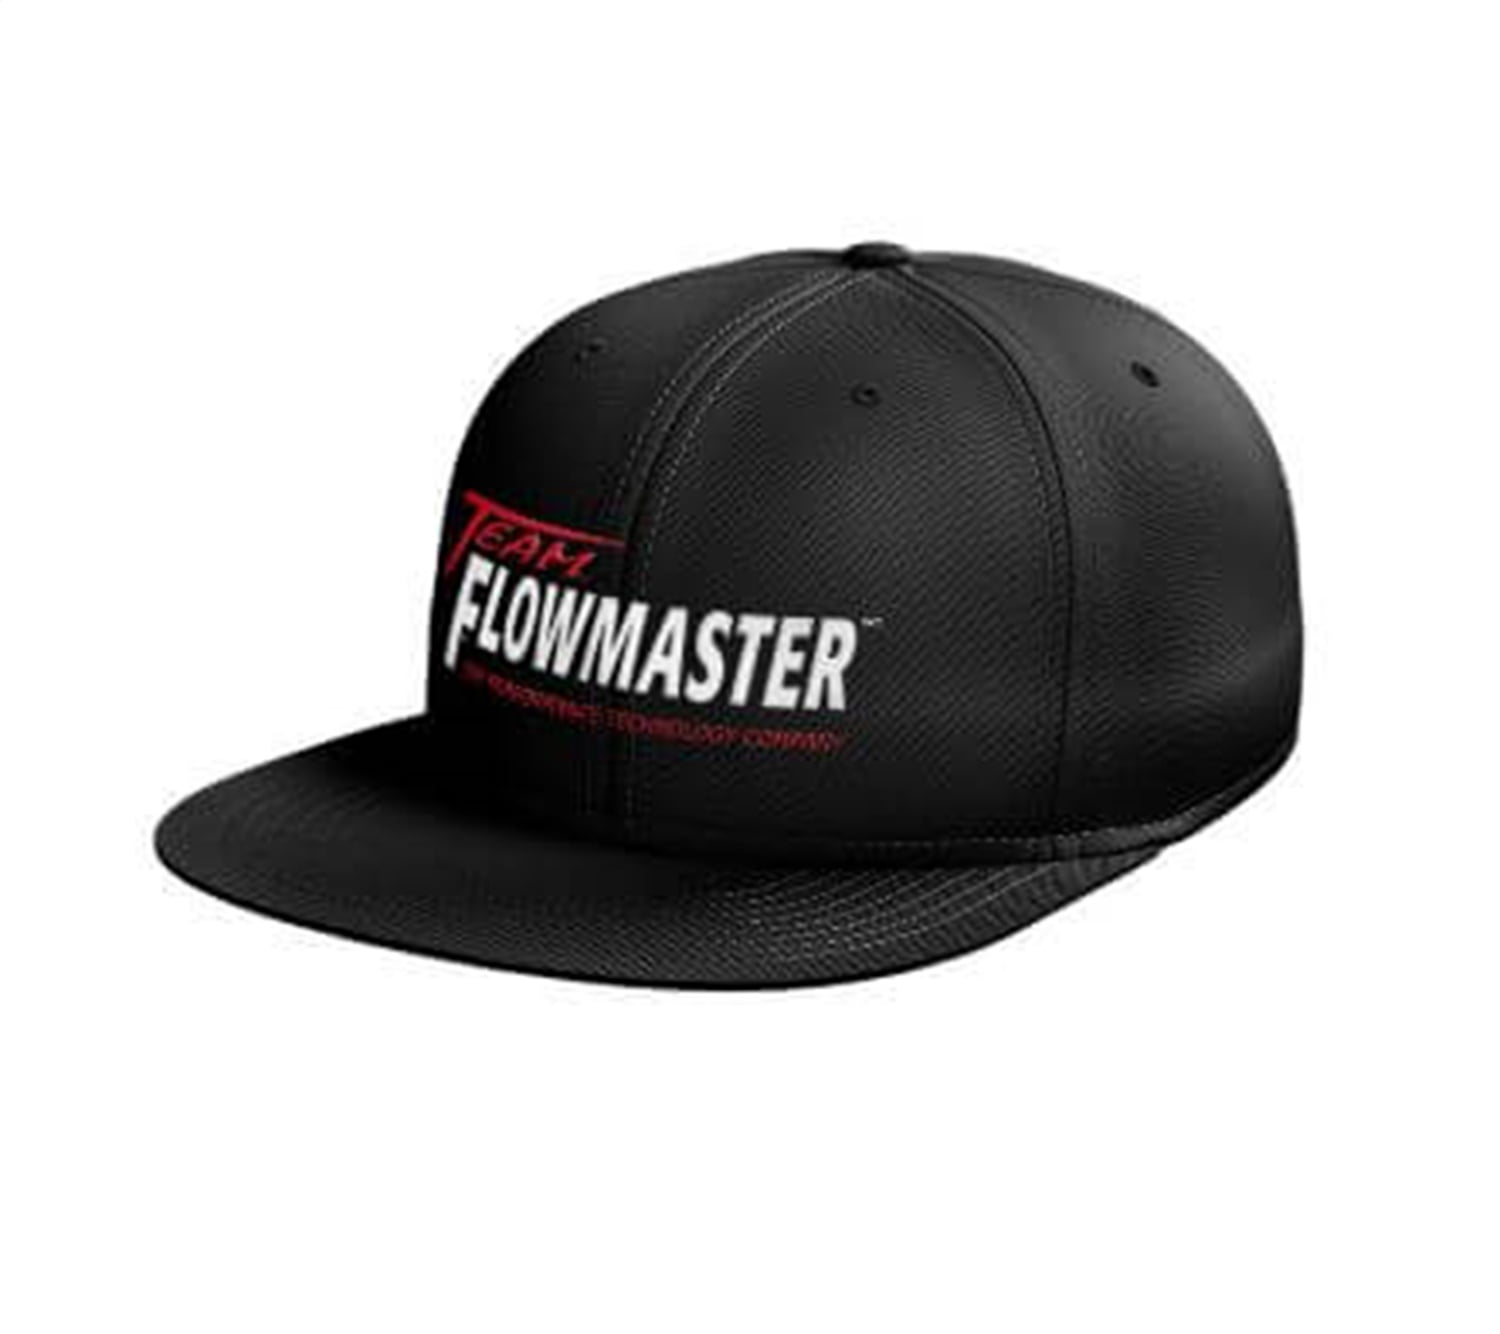 Flowmaster 610352 Flowmaster T-Shirt 